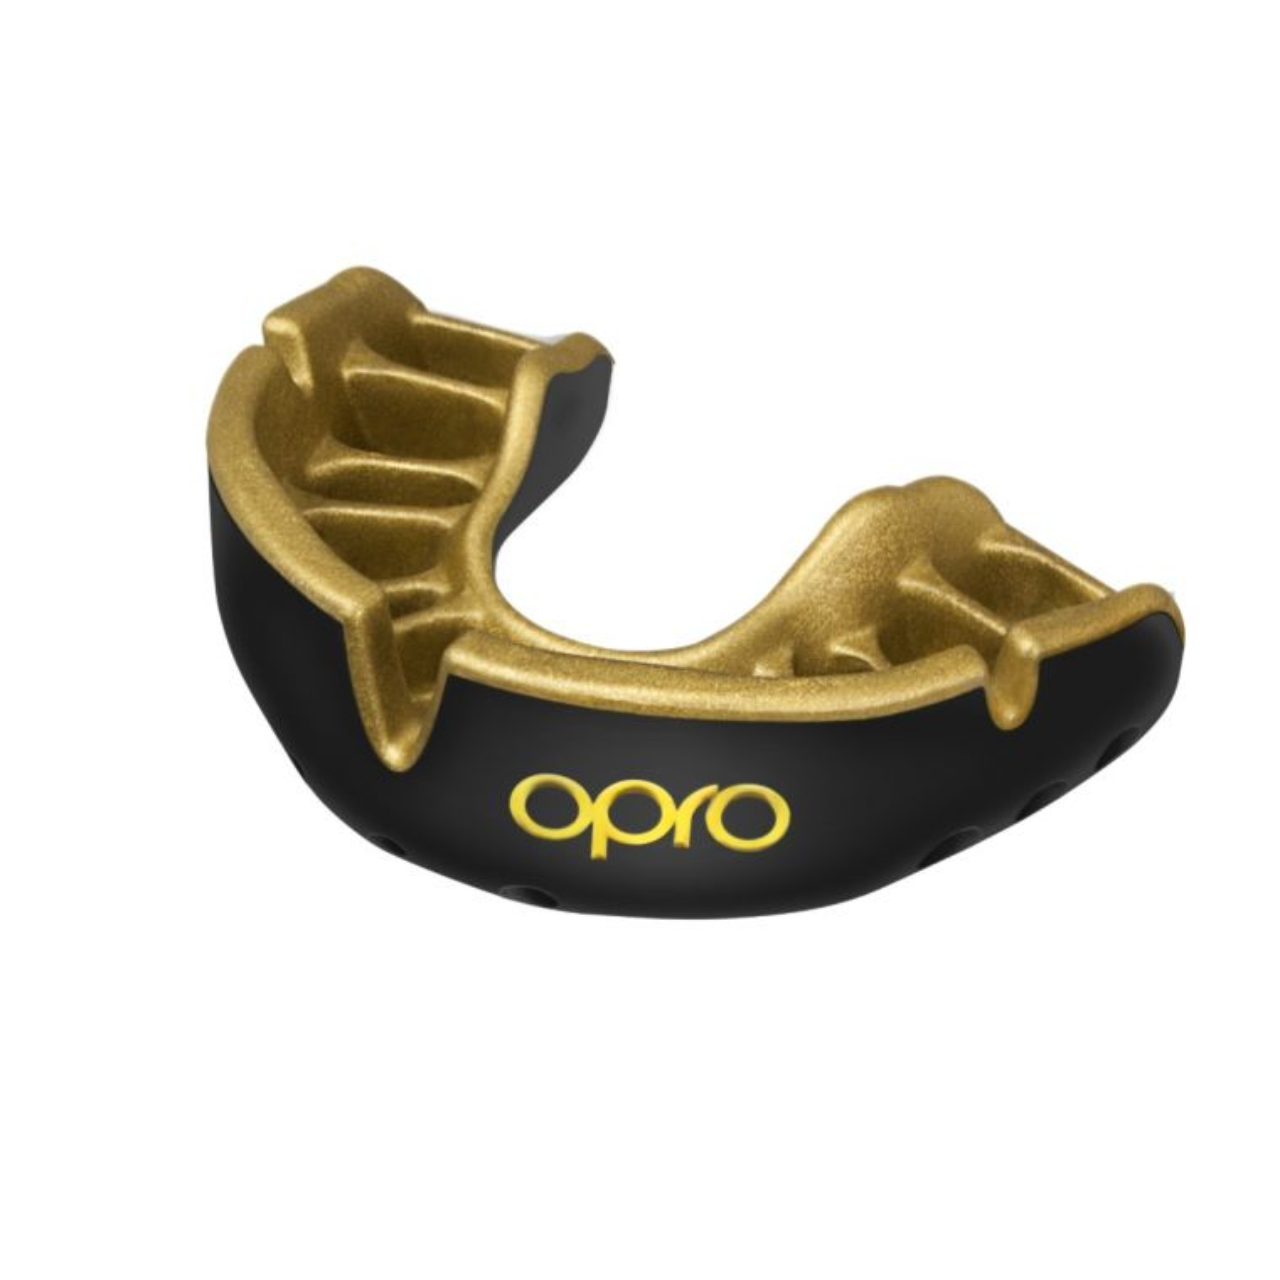 OPRO Gold Level Black - واقي الفم المناسب لمستوى المنافسة